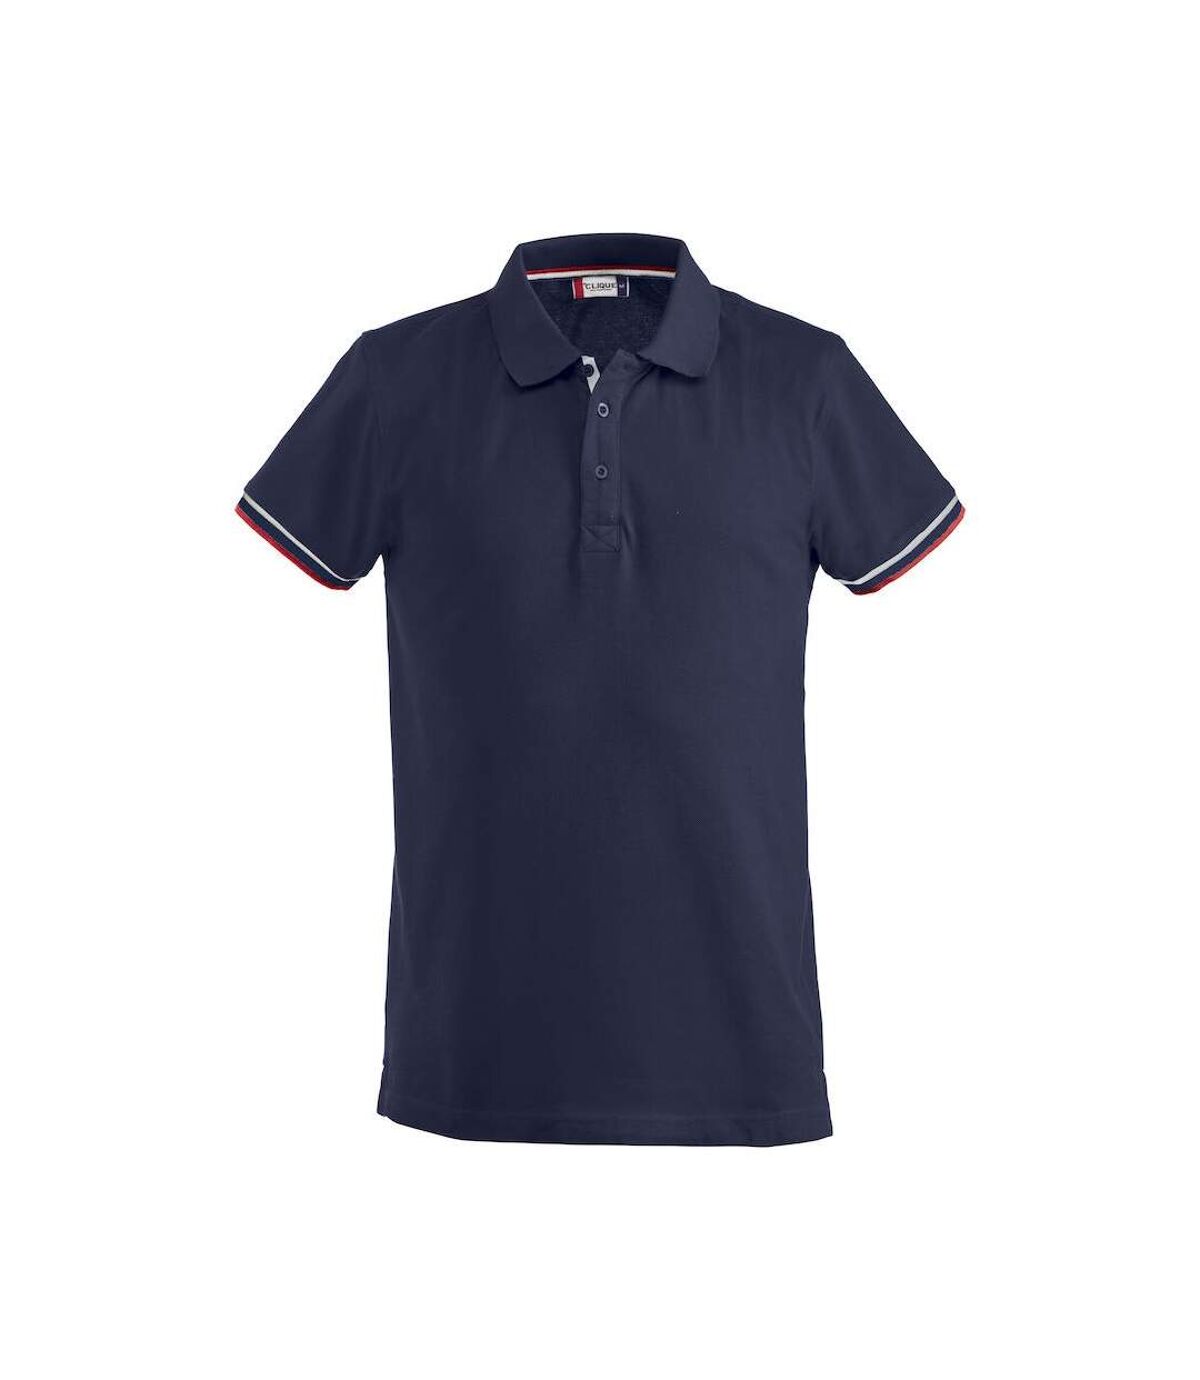 Clique Mens Newton Stripe Detail Polo Shirt (Dark Navy)